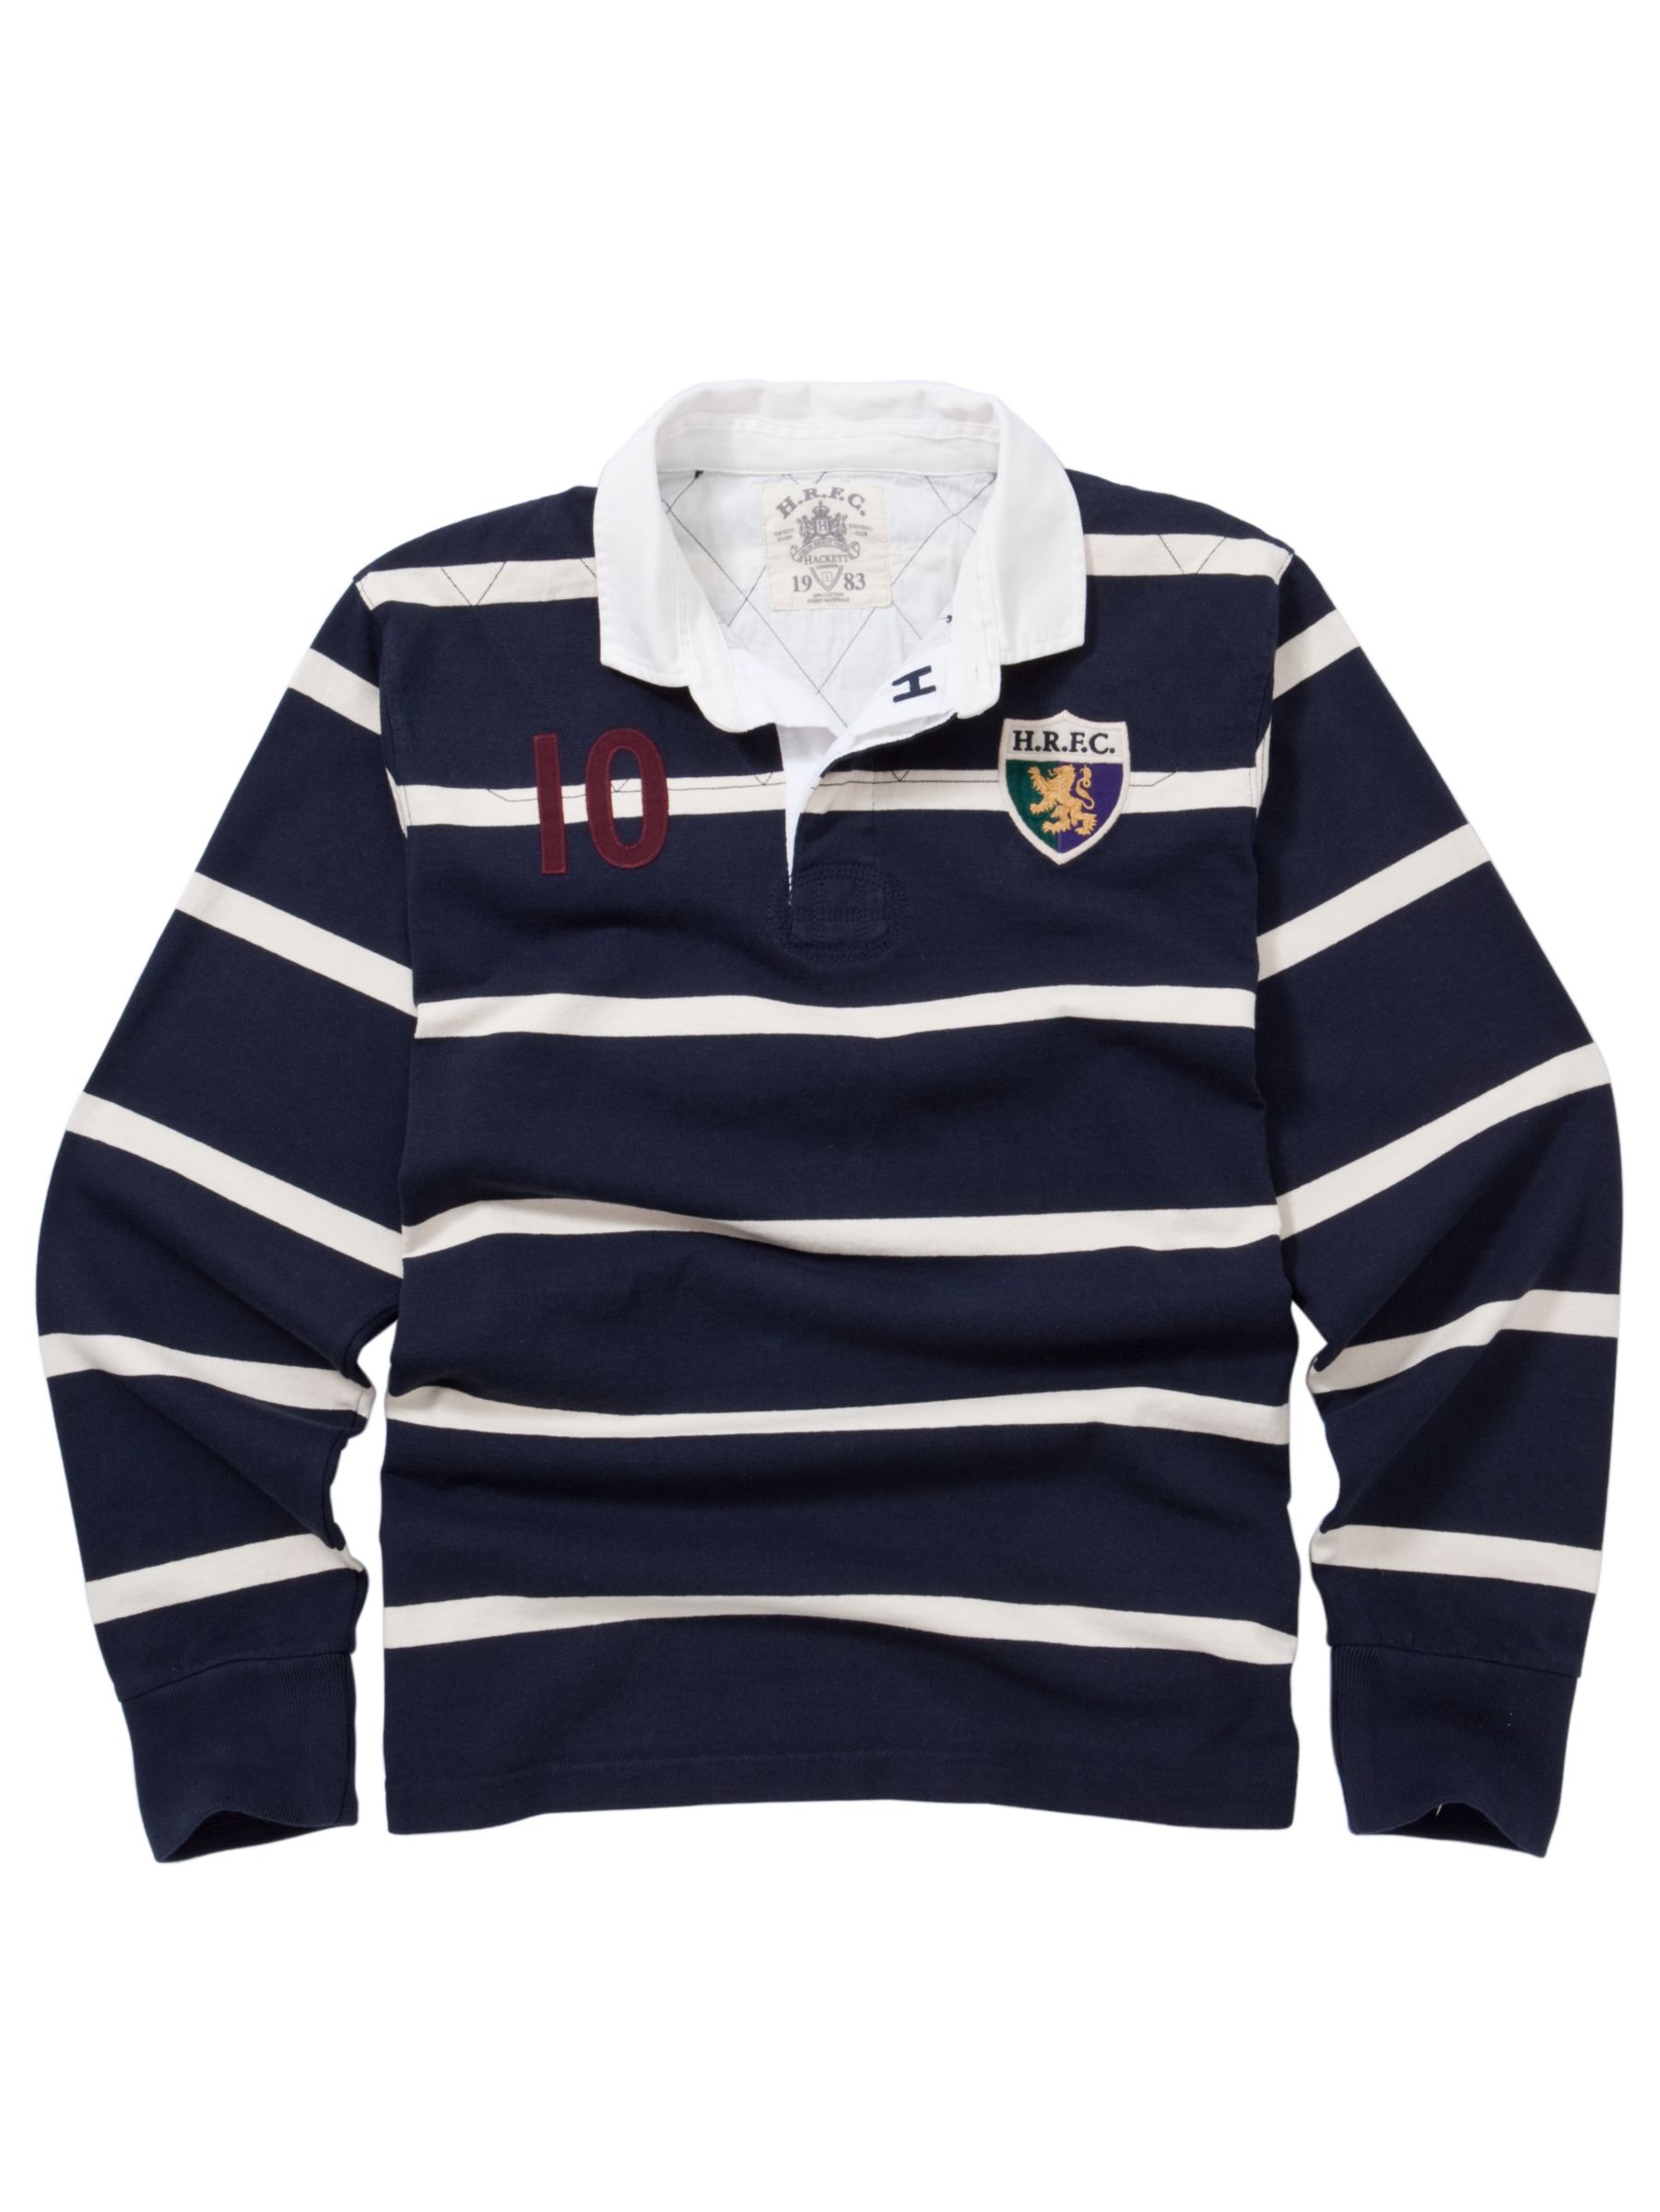 Inch Stripe Rugby Shirt, Navy